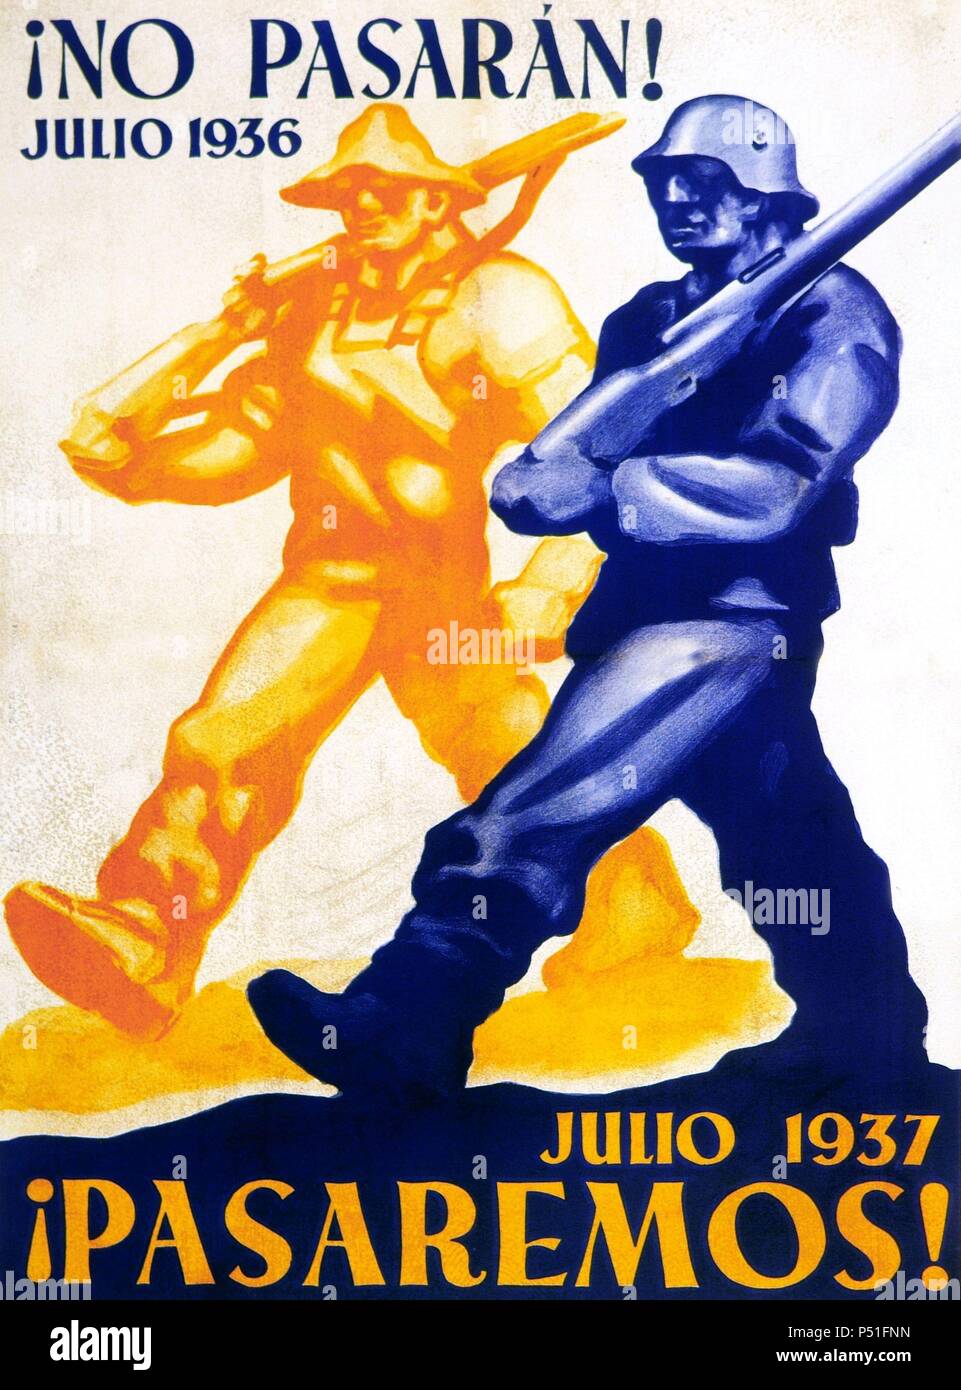 La Guerra Civil Española (1936), Board Game